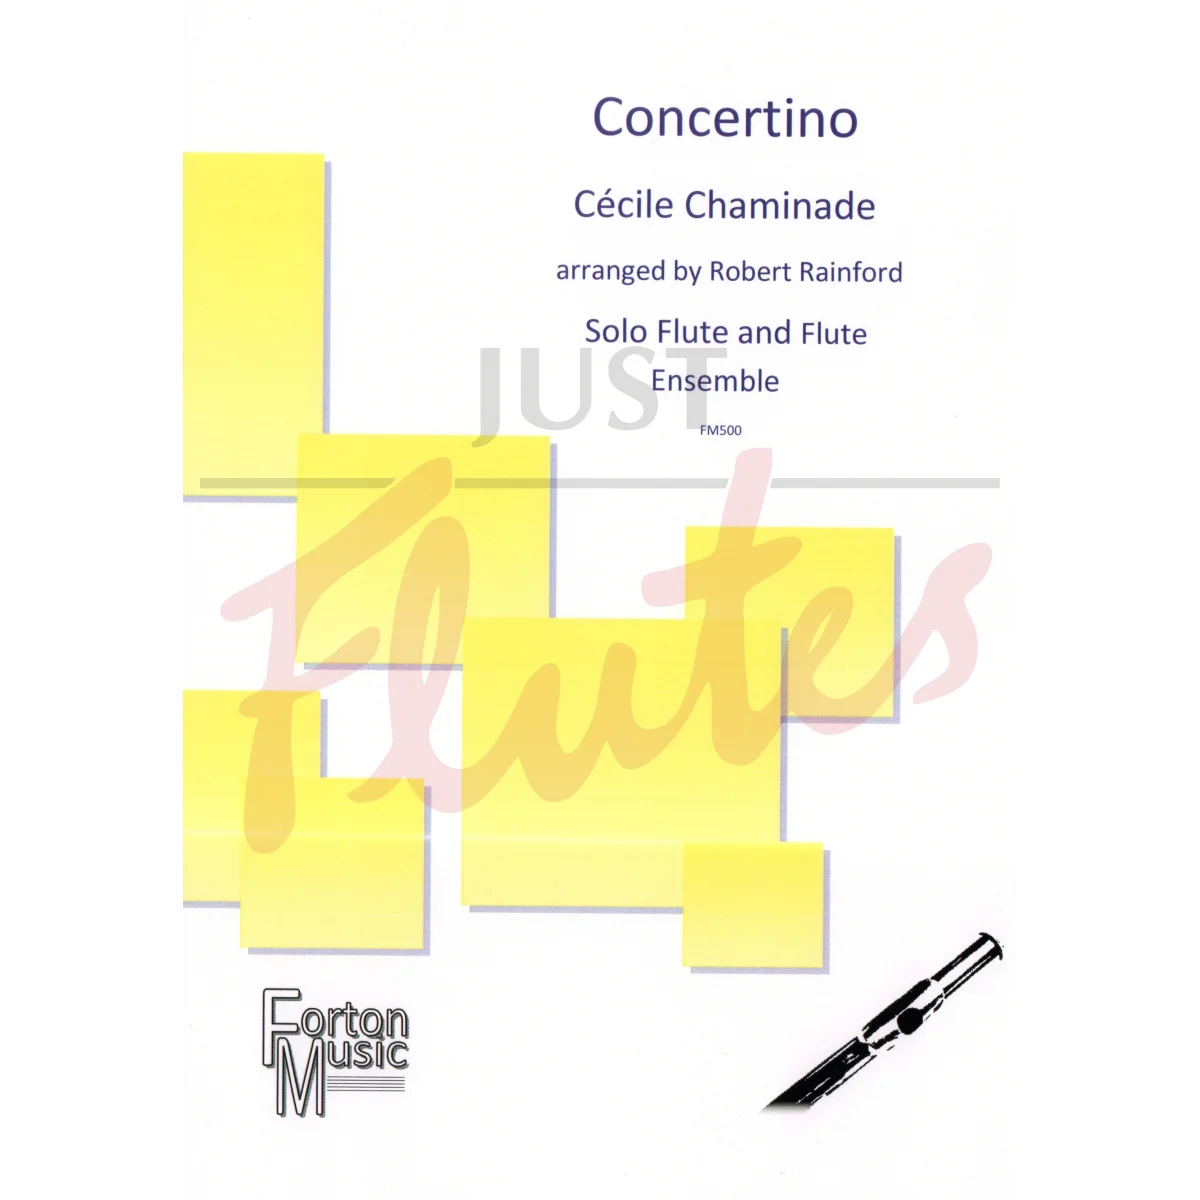 Concertino for Solo Flute and Flute Ensemble